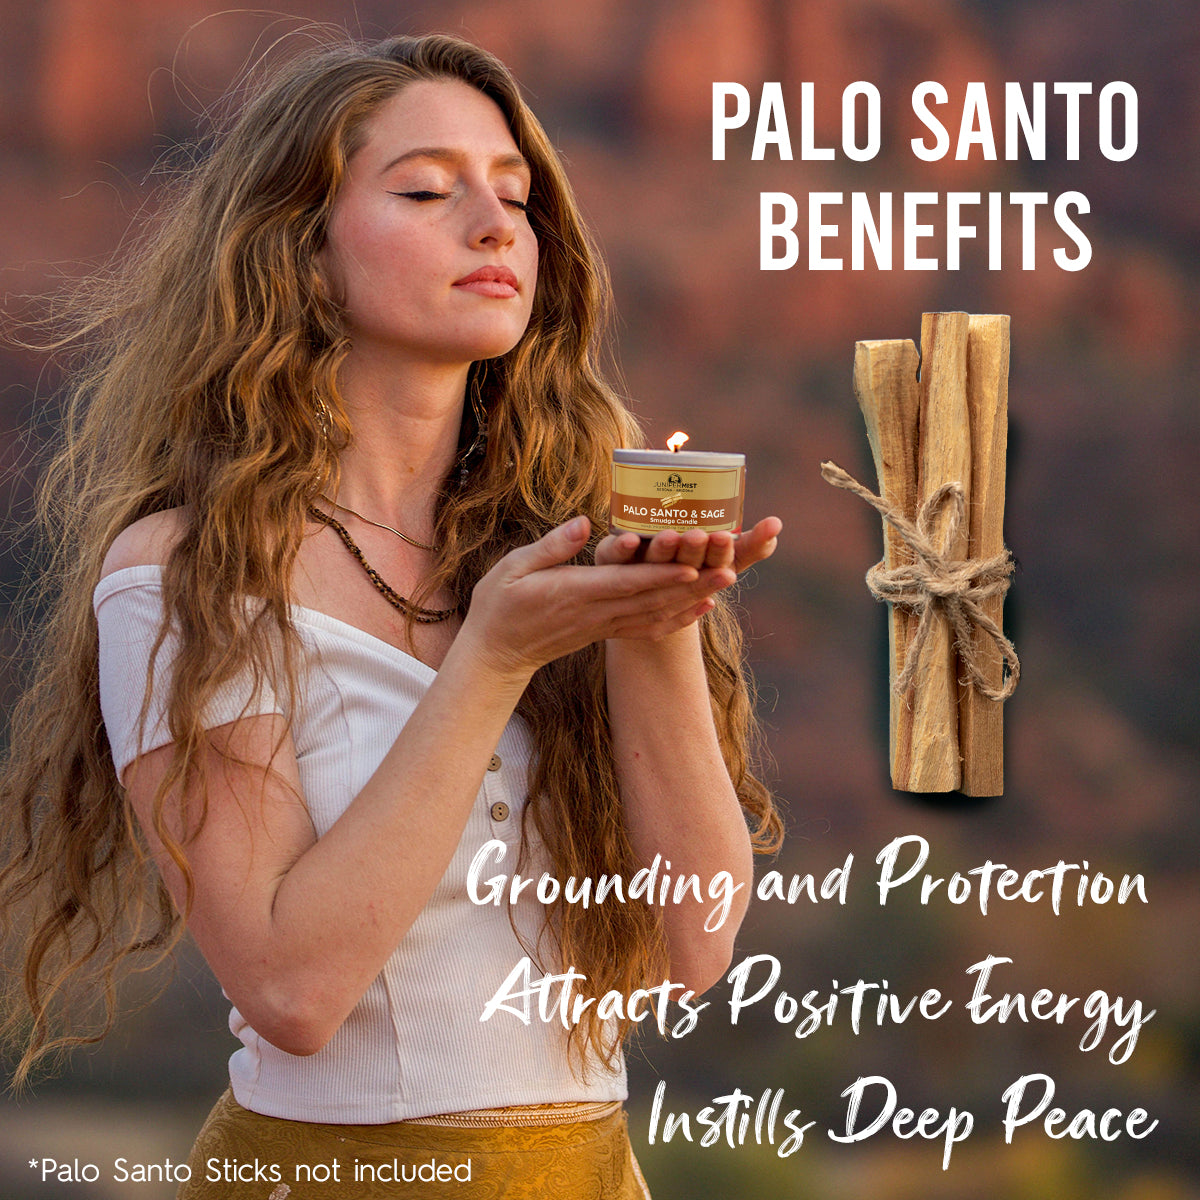 Palo Santo Smudge Candle with White Sage Leaf